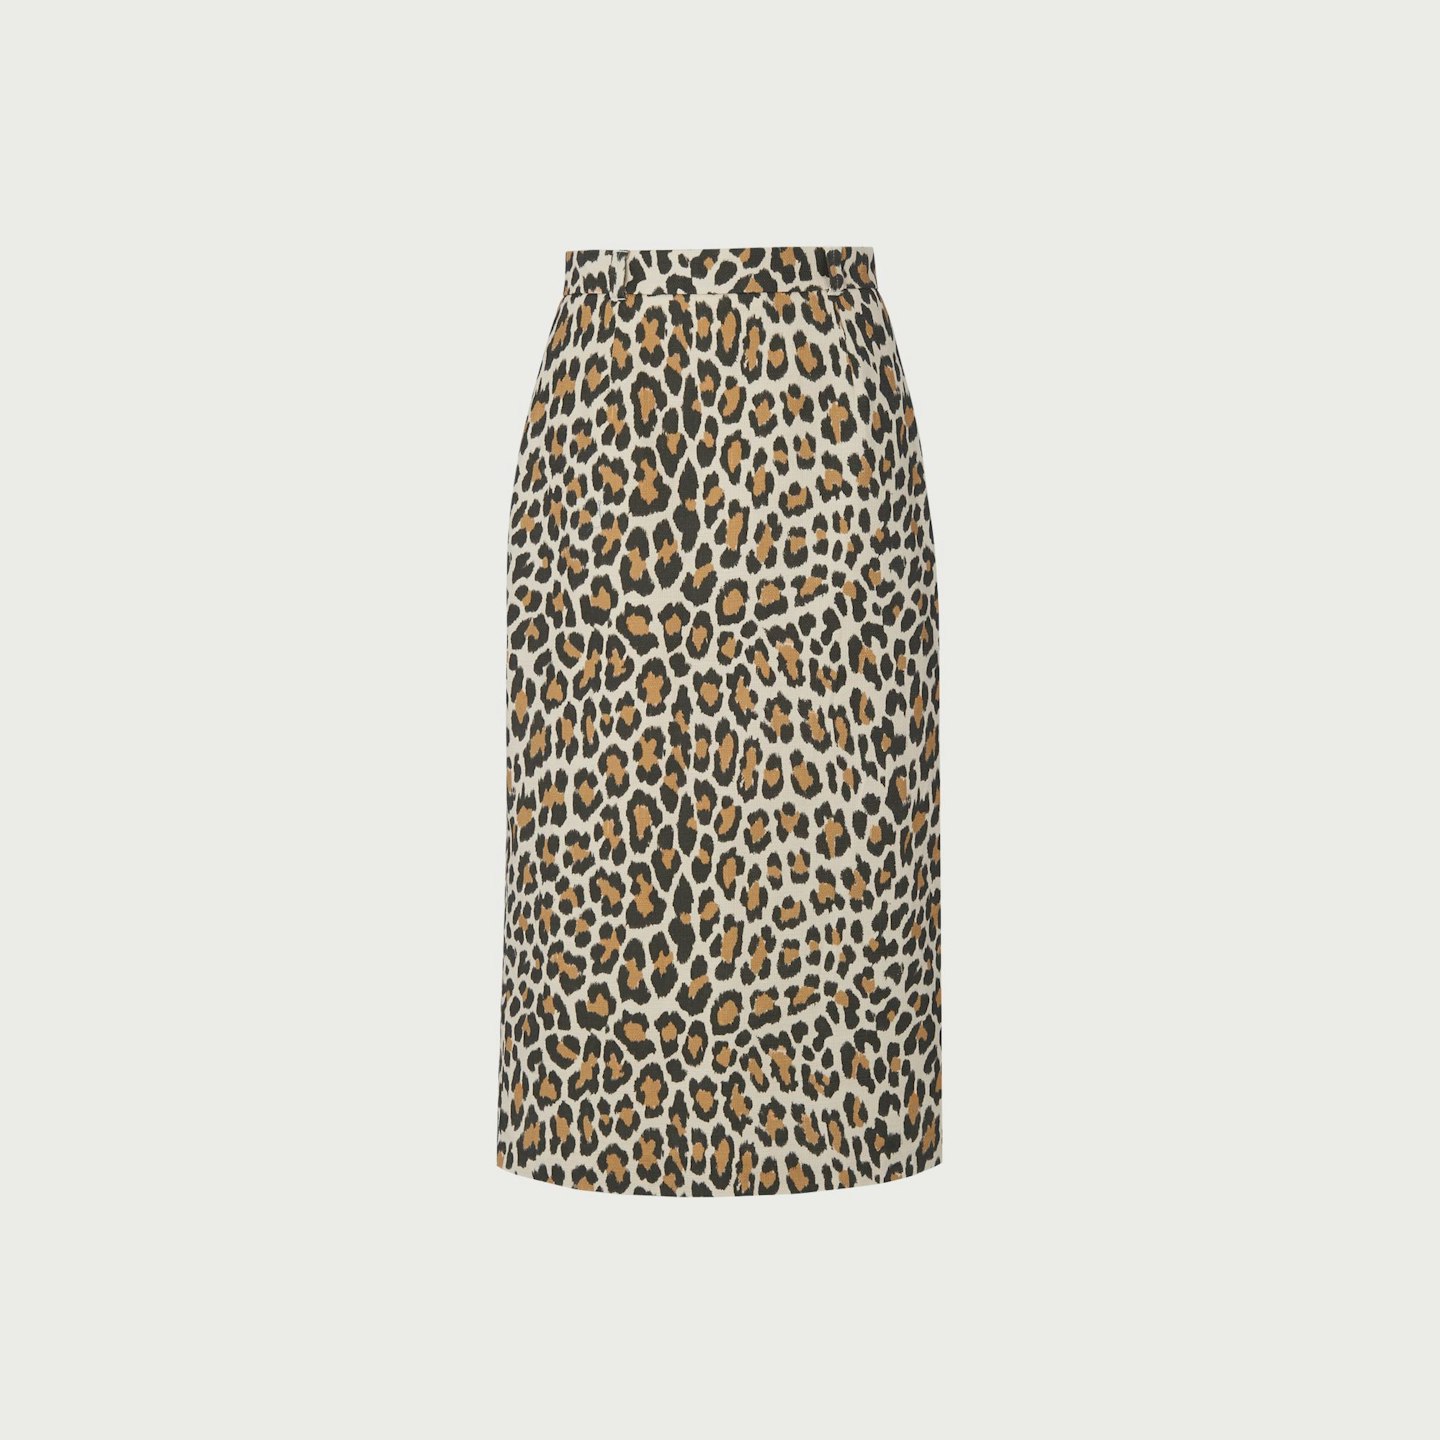 L.K.Bennett, Leopard Print Pencil Skirt, £112